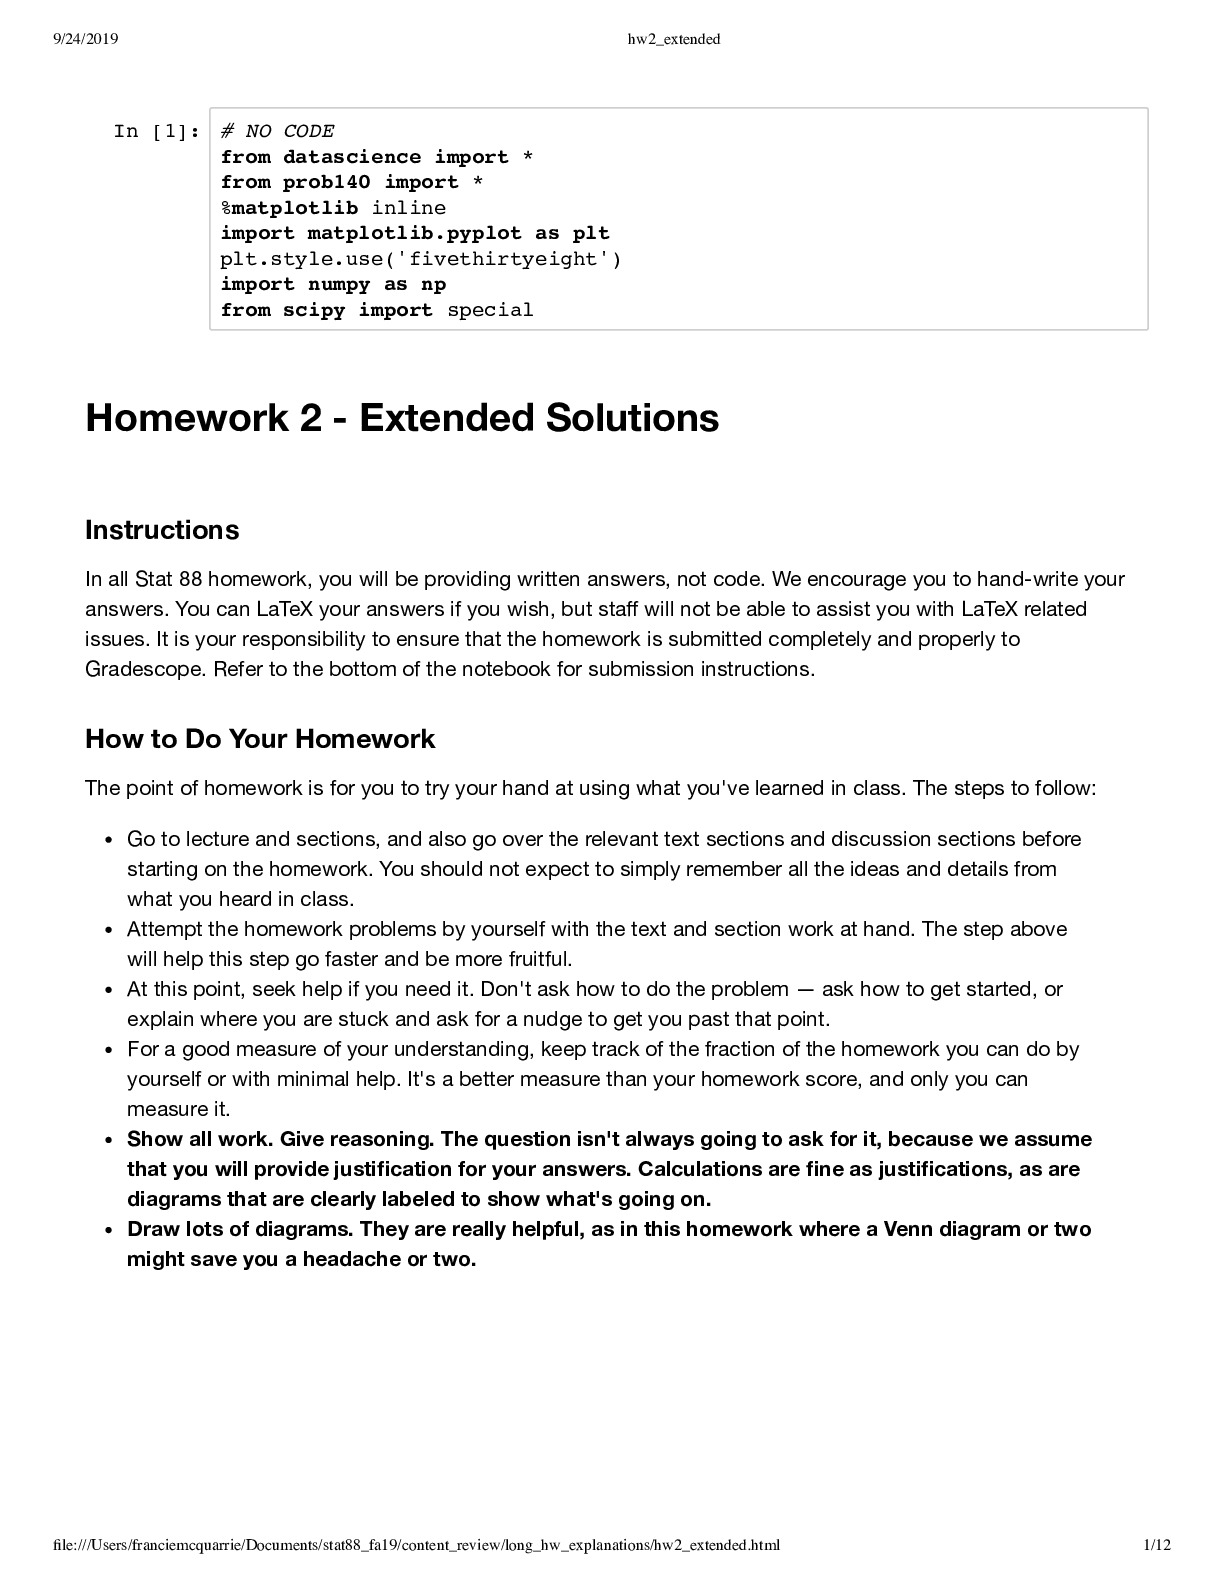 hw2_explained_sol.pdf (1)